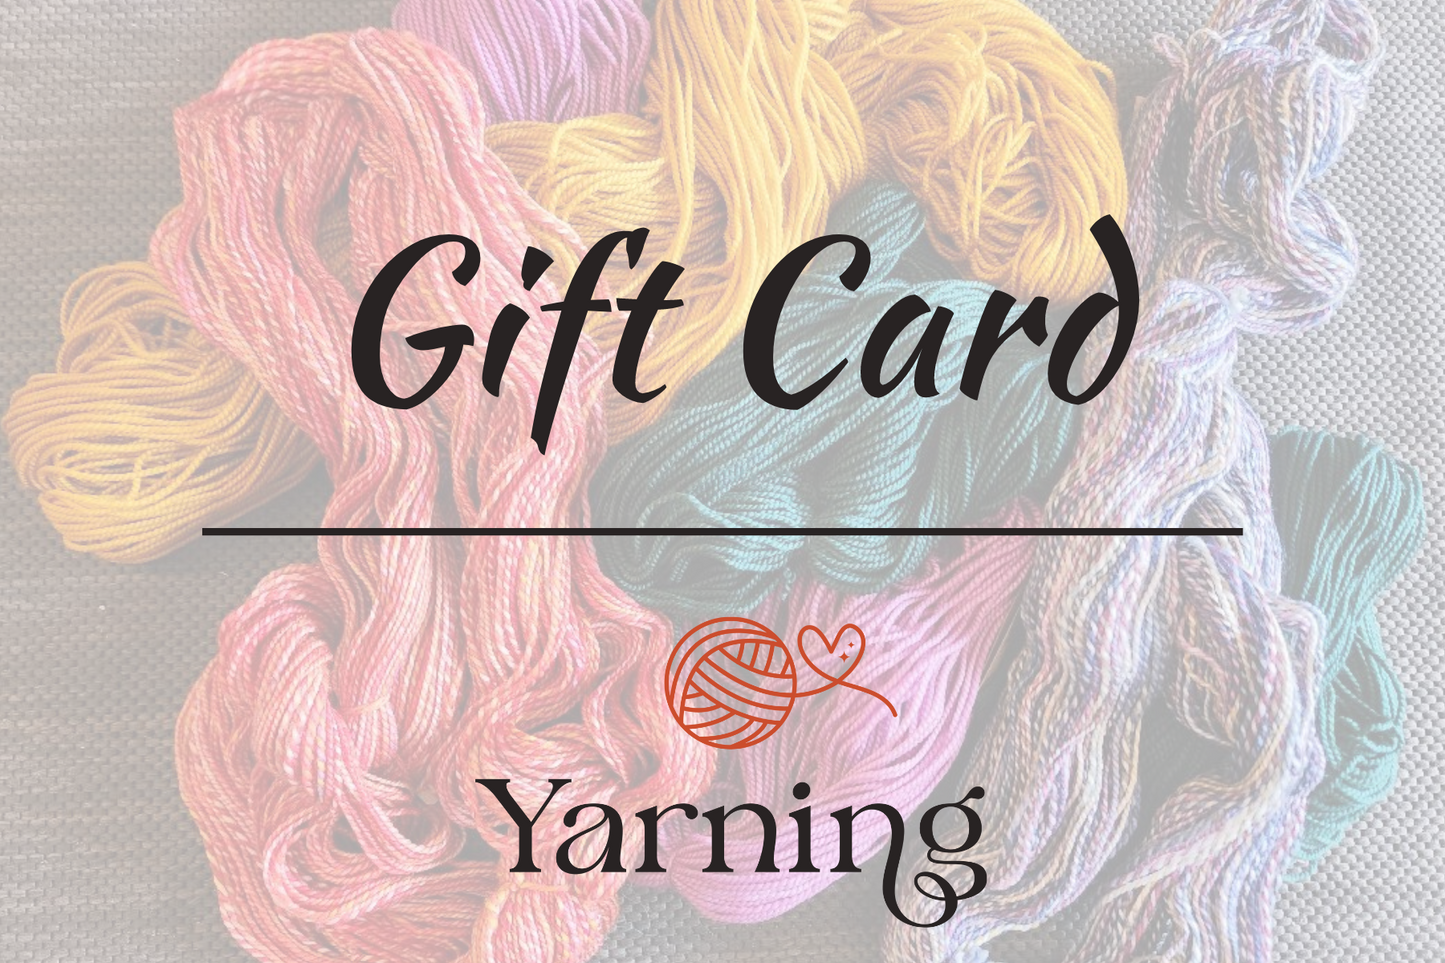 Yarning Gift Card $175 +